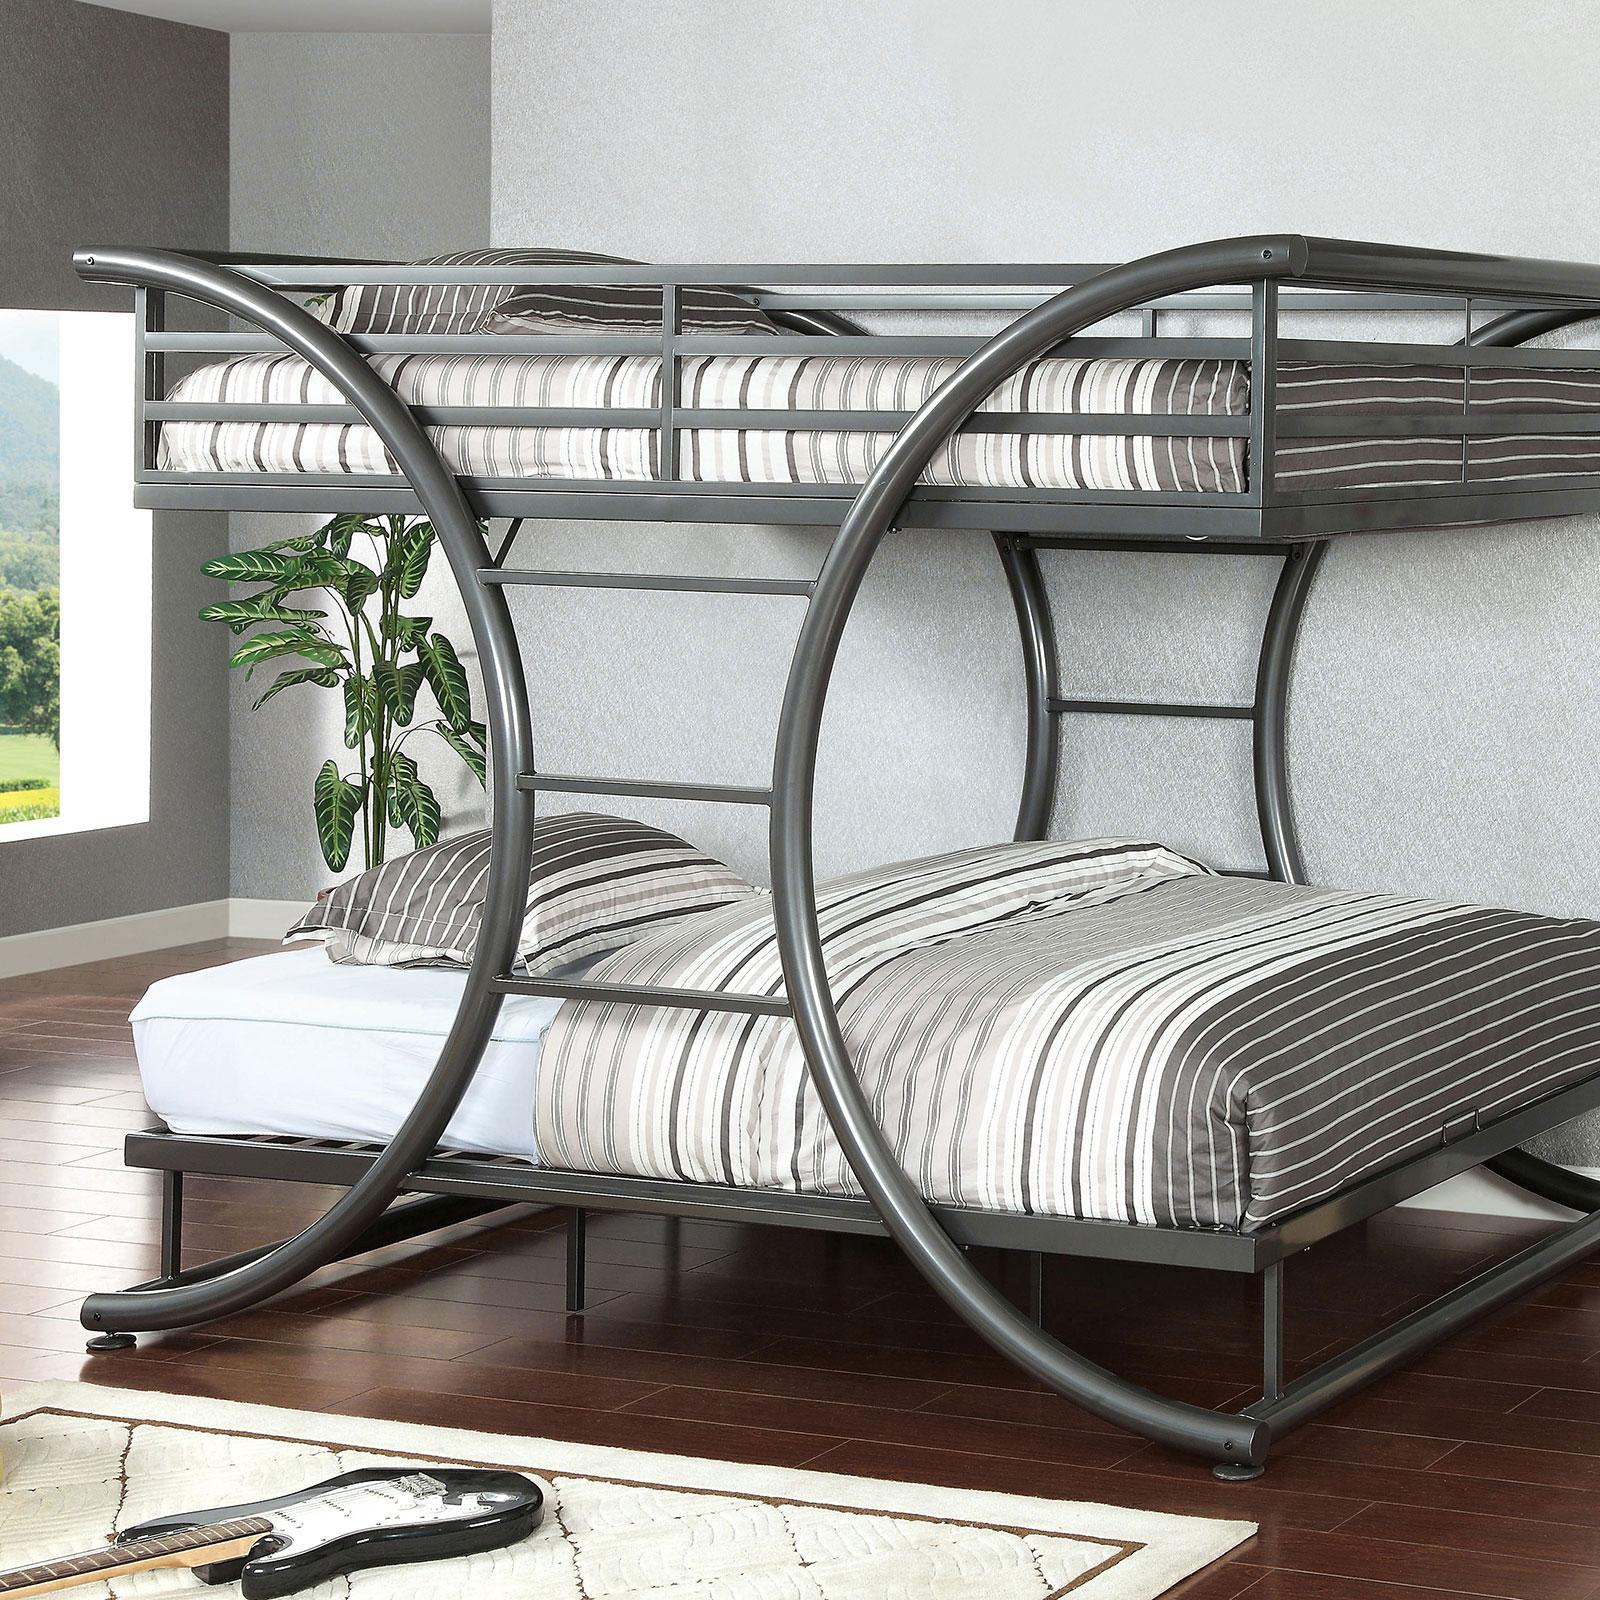 Furniture of America LEXIS CM-BK1036GM Bunk Bed